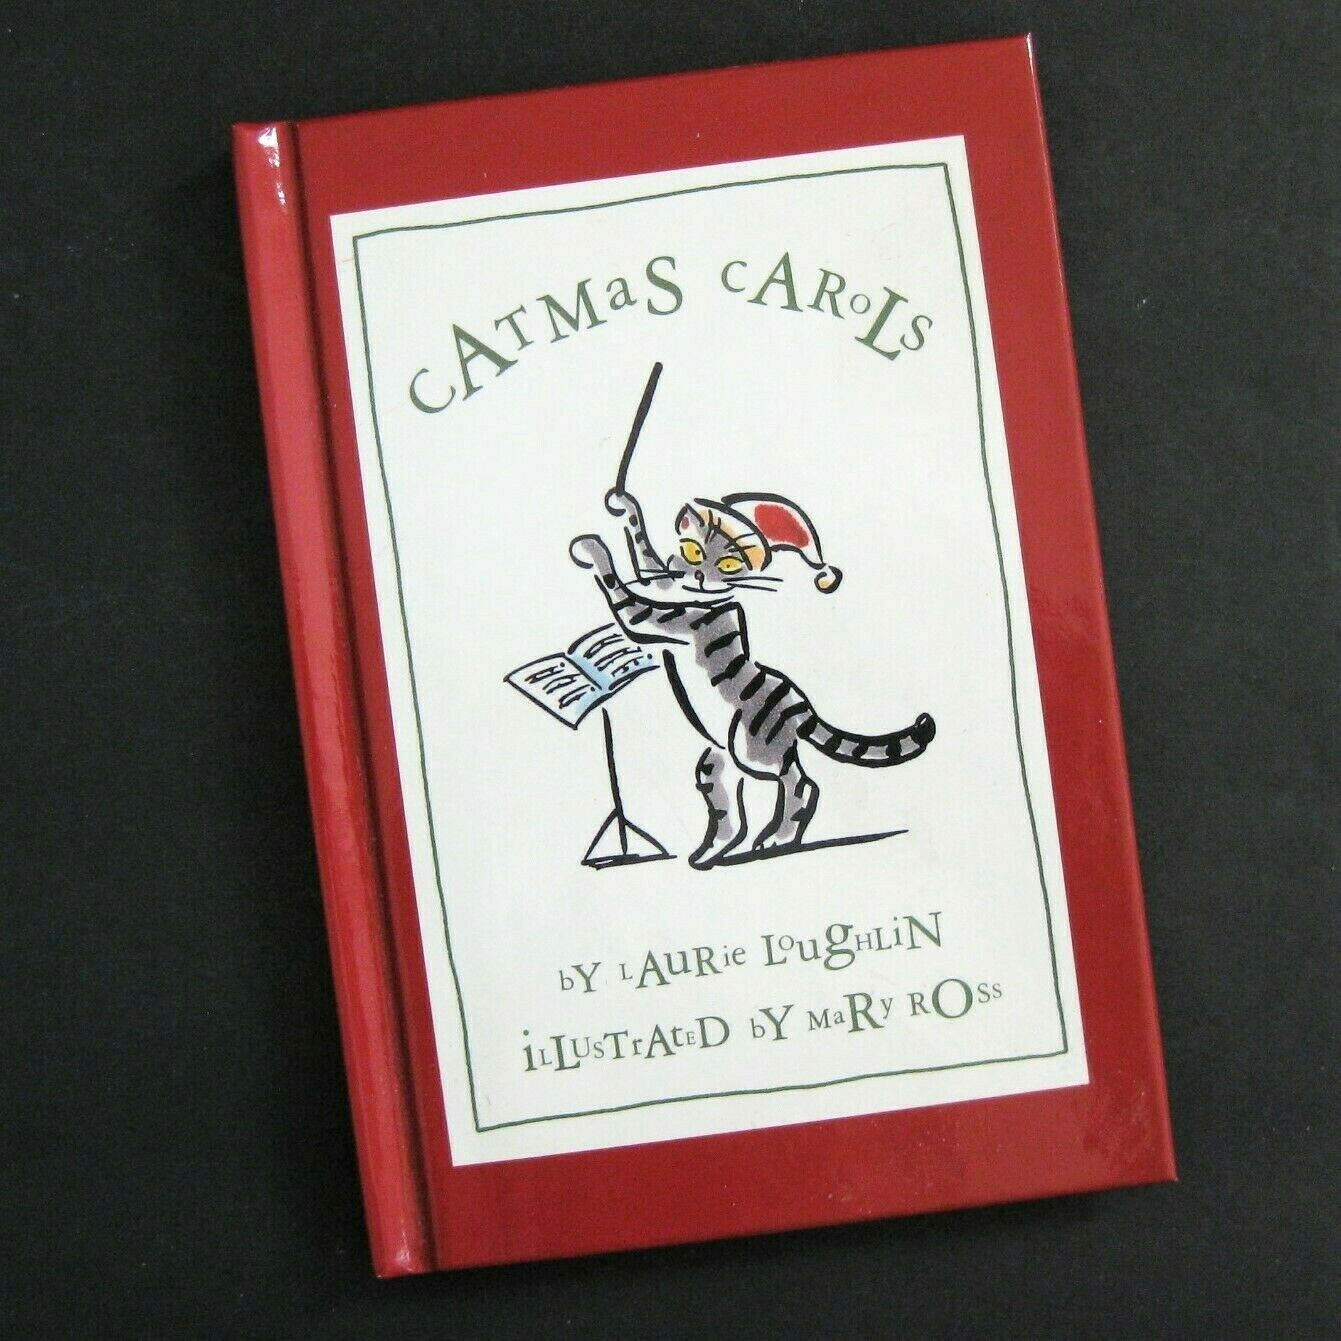 Catmas Carols Small Gift Book Laurie Loughlin Christmas Holiday Music Humor